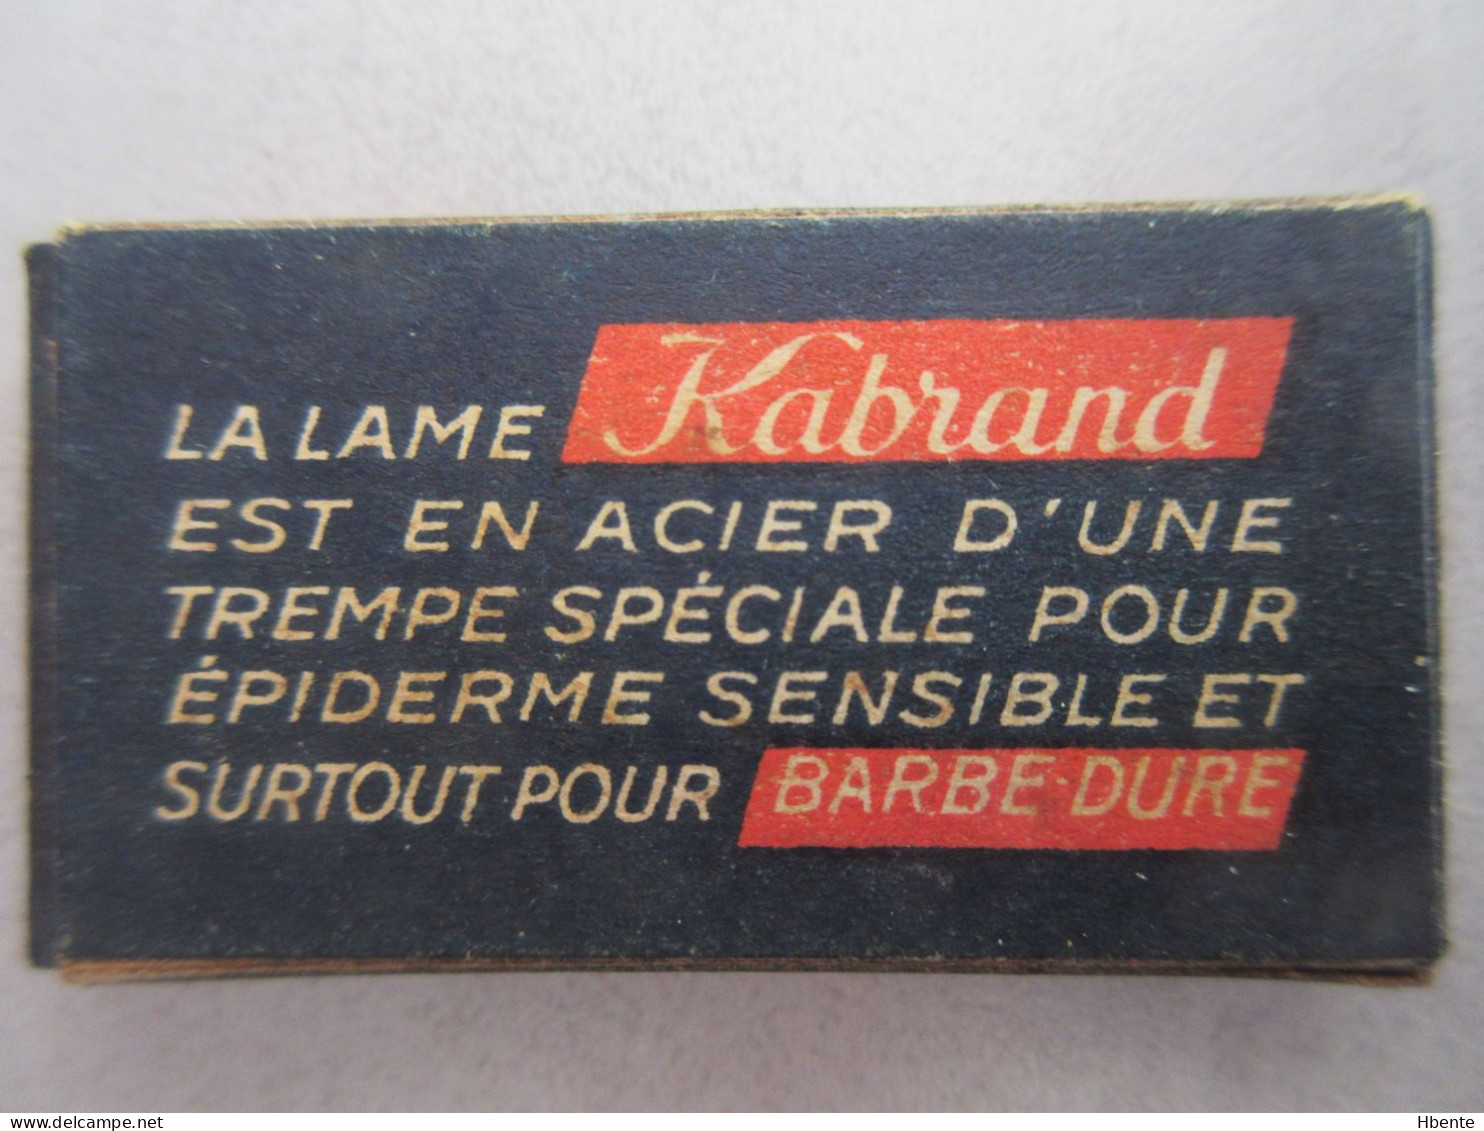 Boite Complète De 5 Lames De Rasoir KABRAND - Complet Box Of 5 Rasor Blades - Scheermesjes